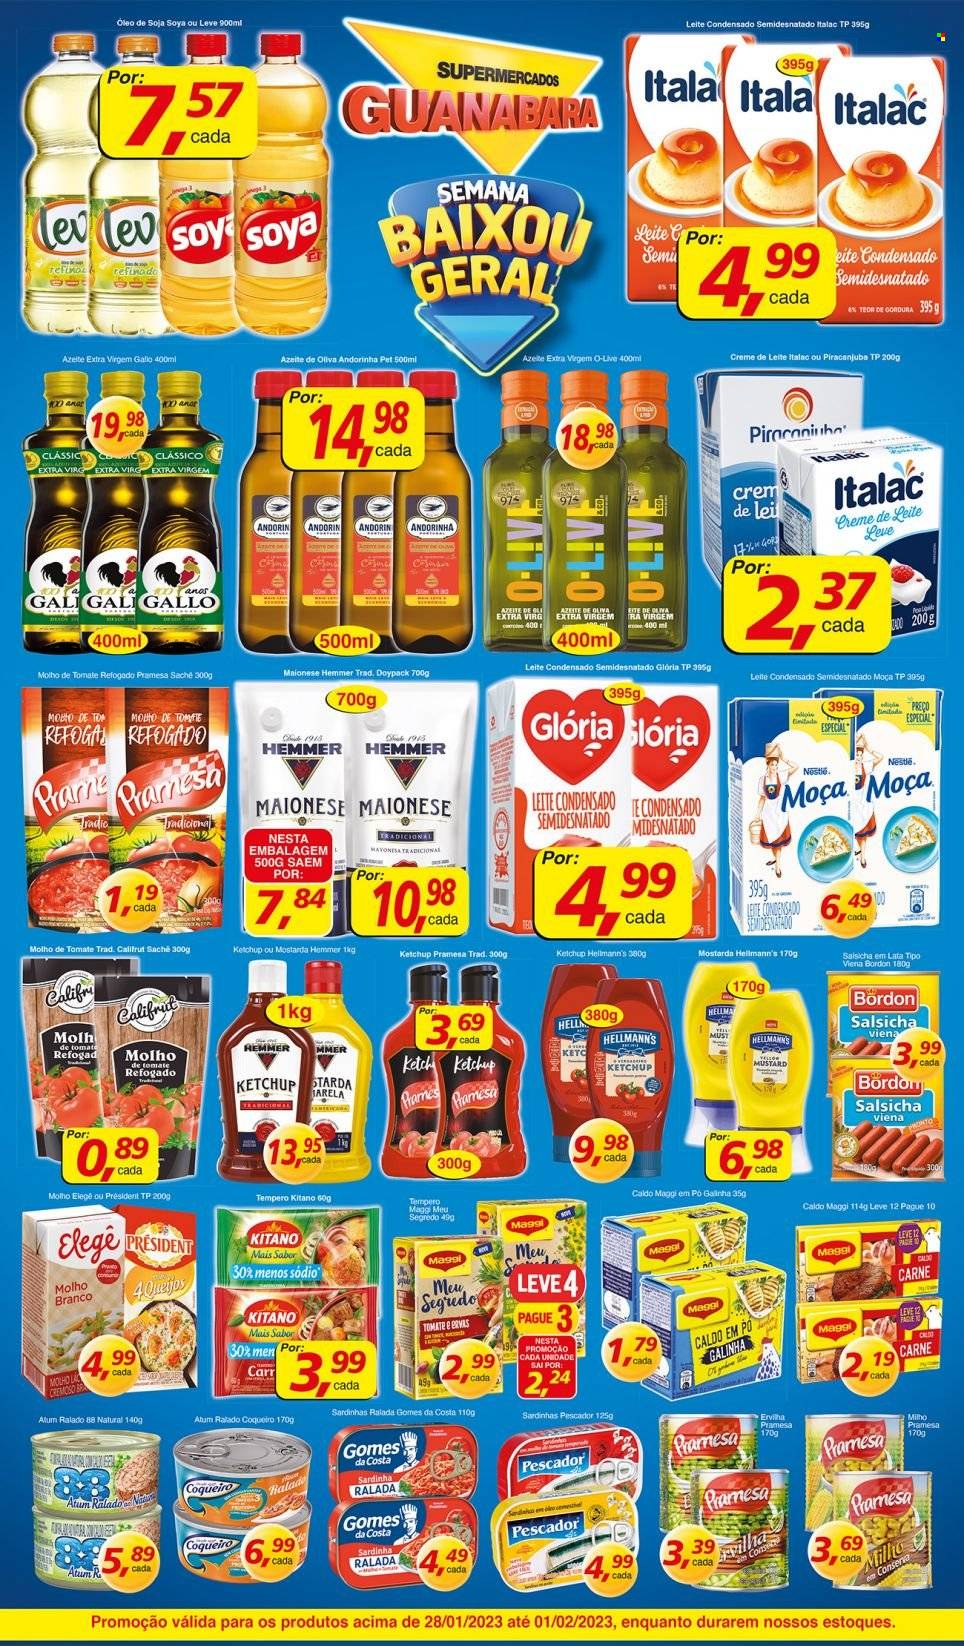 Encarte Supermercados Guanabara  - 28.01.2023 - 01.02.2023.